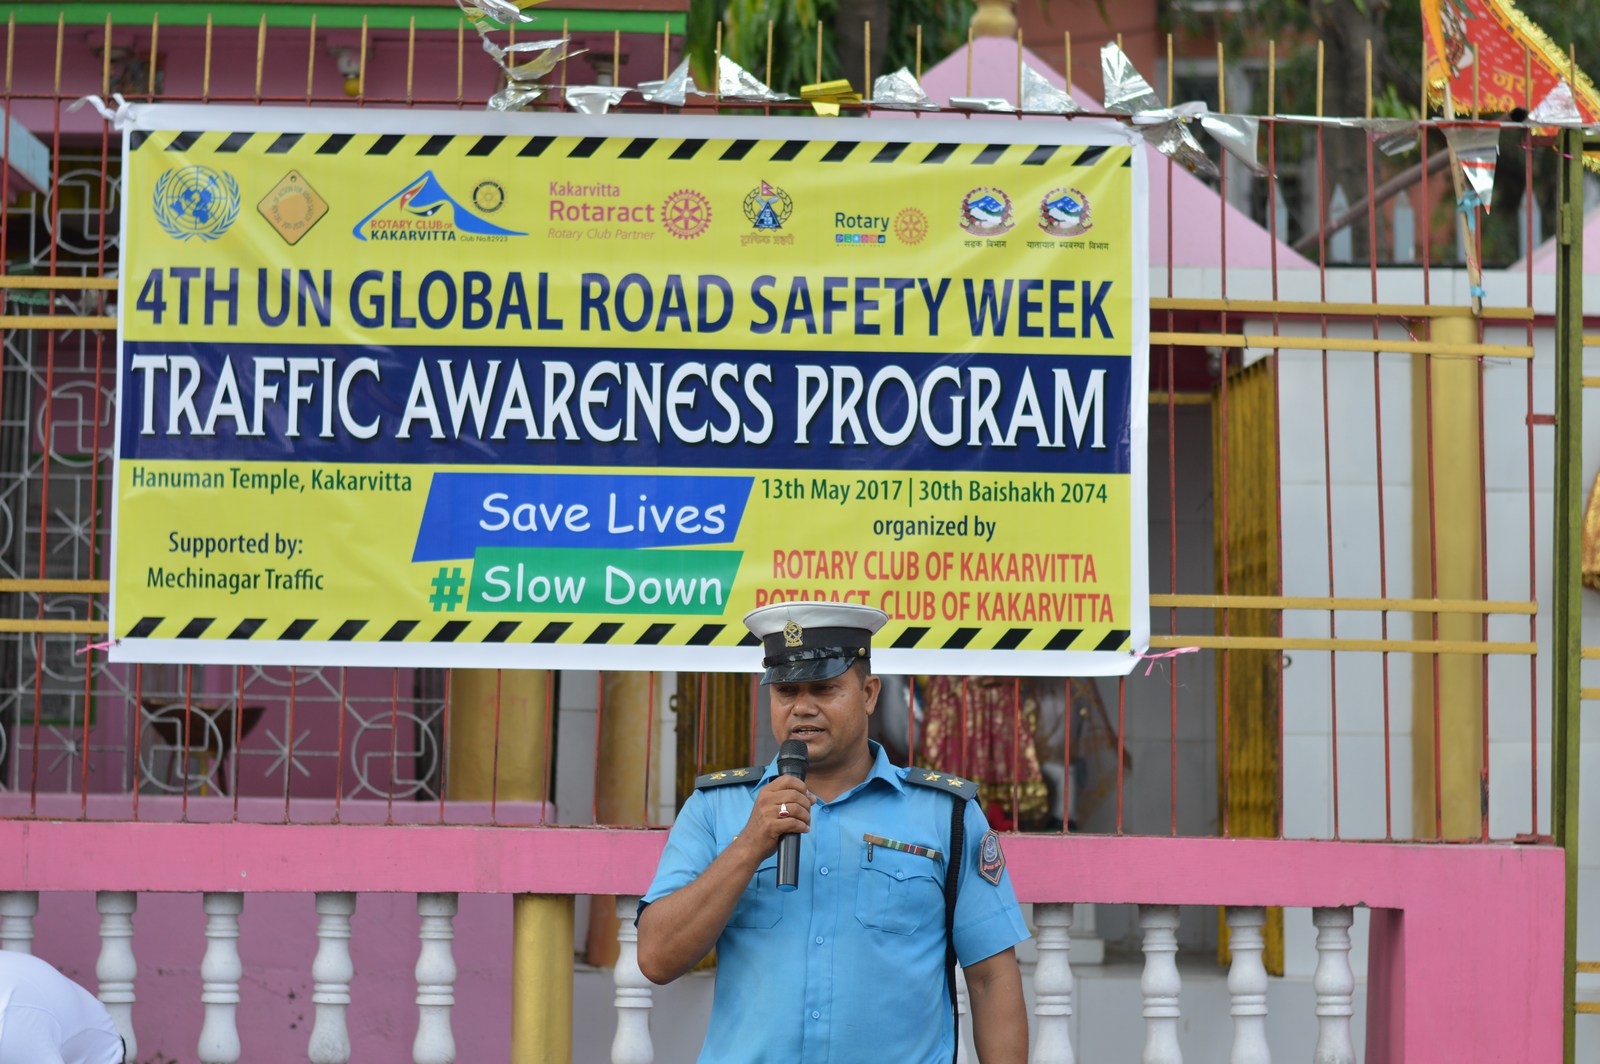 4th-UN-Global-Road-Safety-Week-2017-Traffic-Awareness-Program-Rotary-club-of-Kakarvitta-17